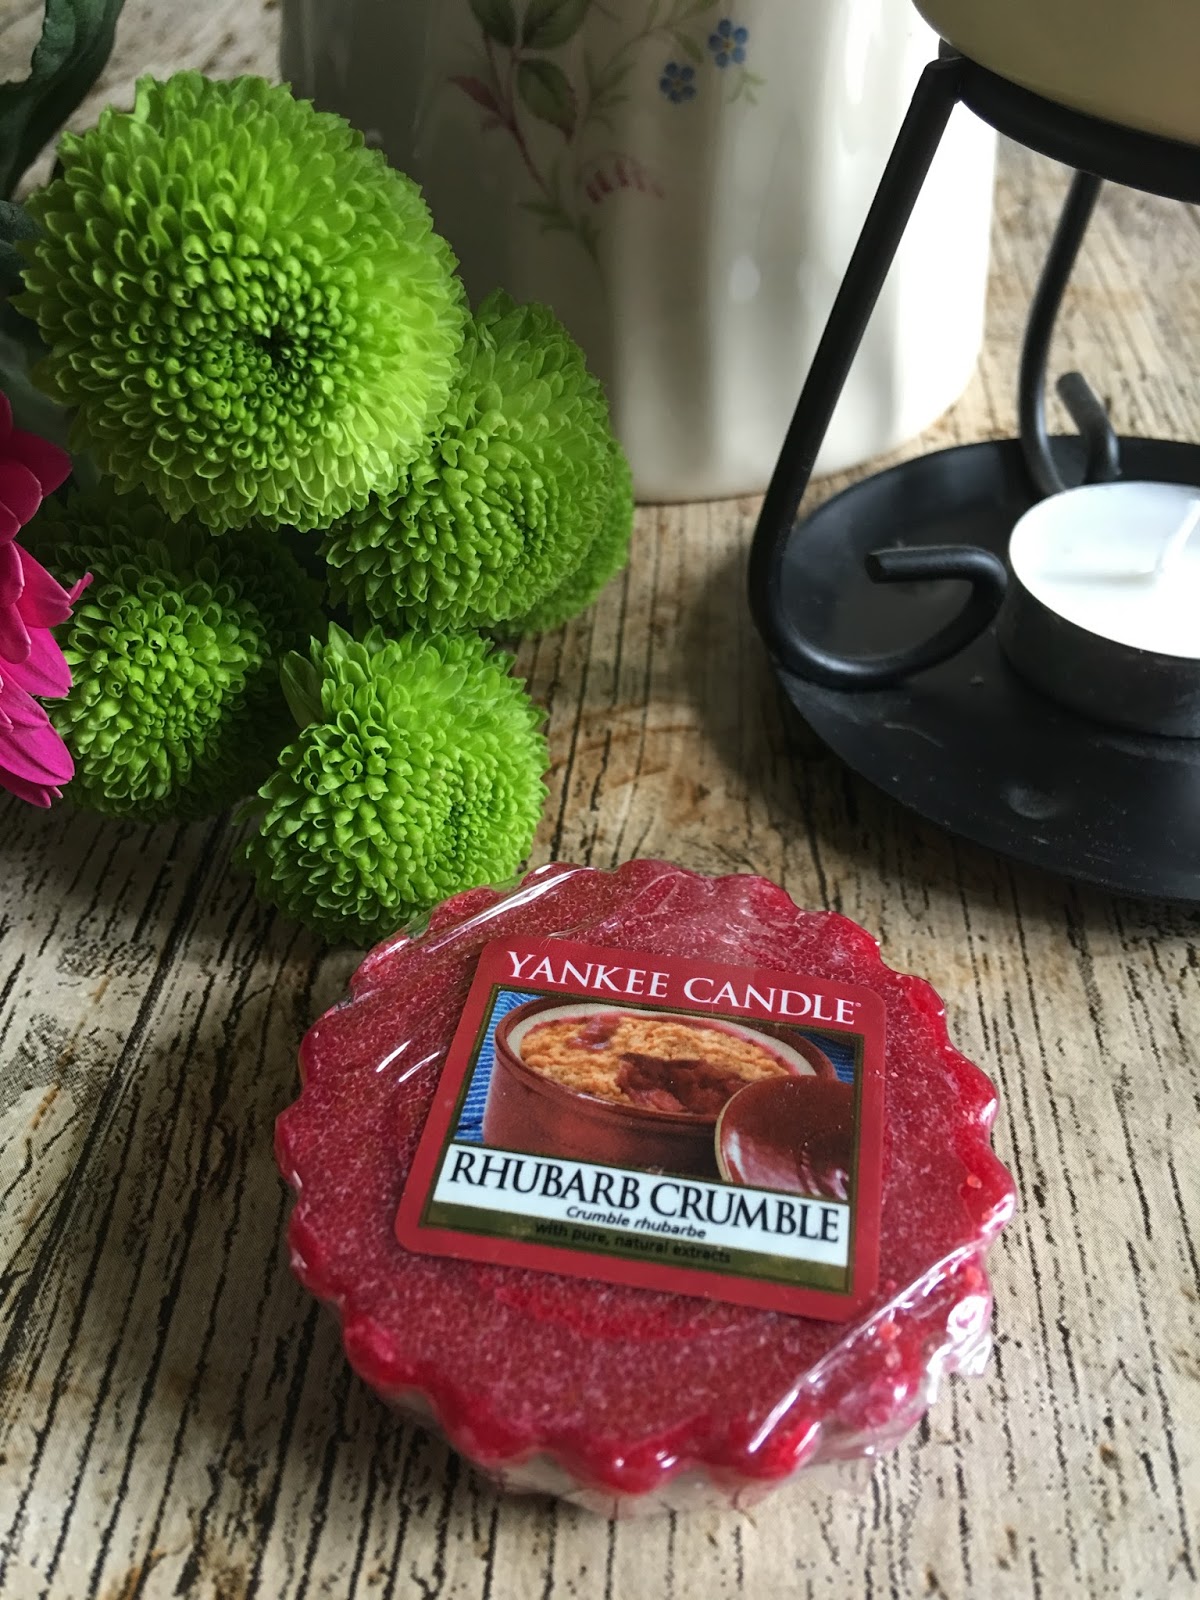 Rhubarb Crumble Yankee candles tart review